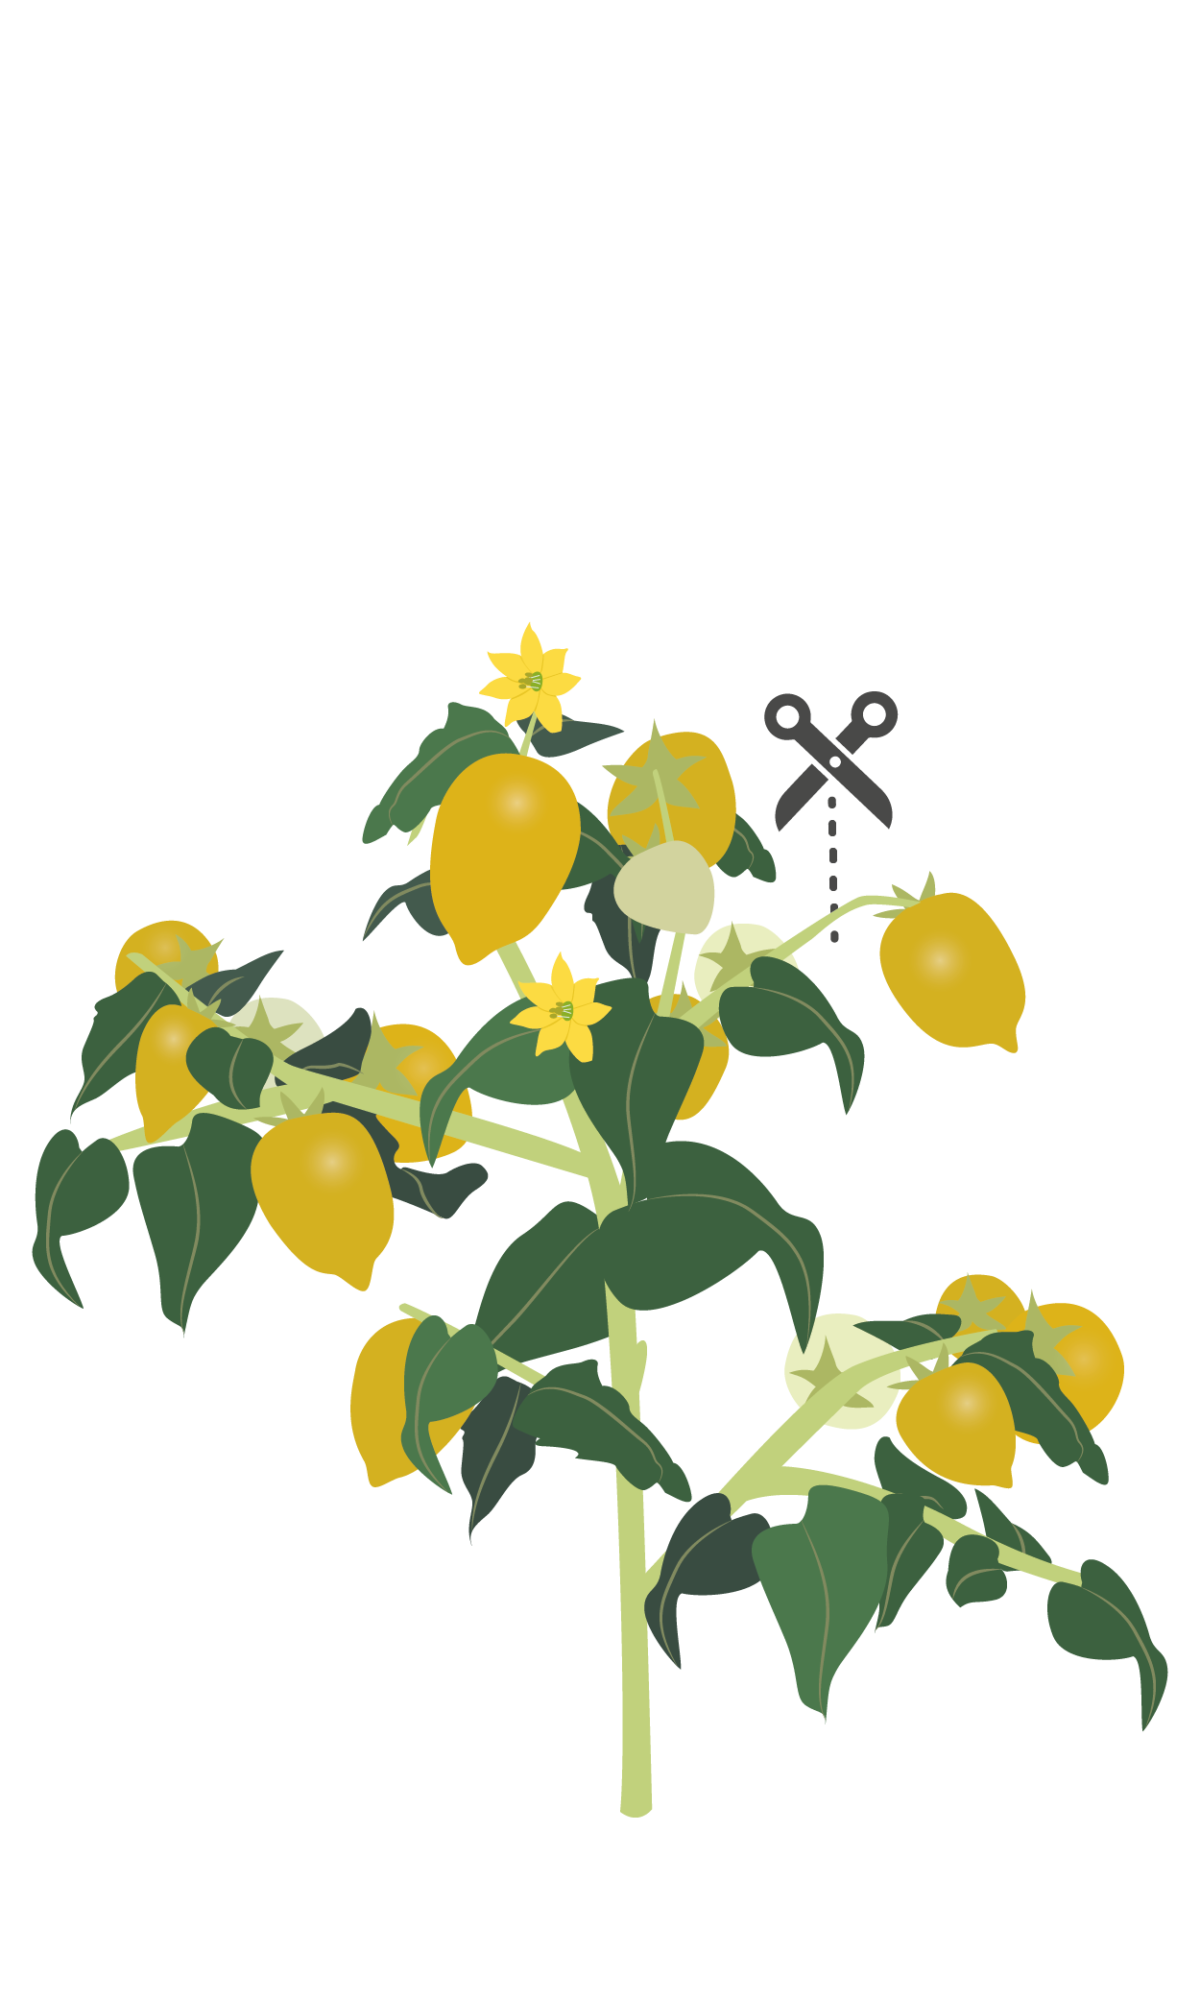 VERITABLE Lingot® Yellow Mini-Tomato - Жълти Мини Домати